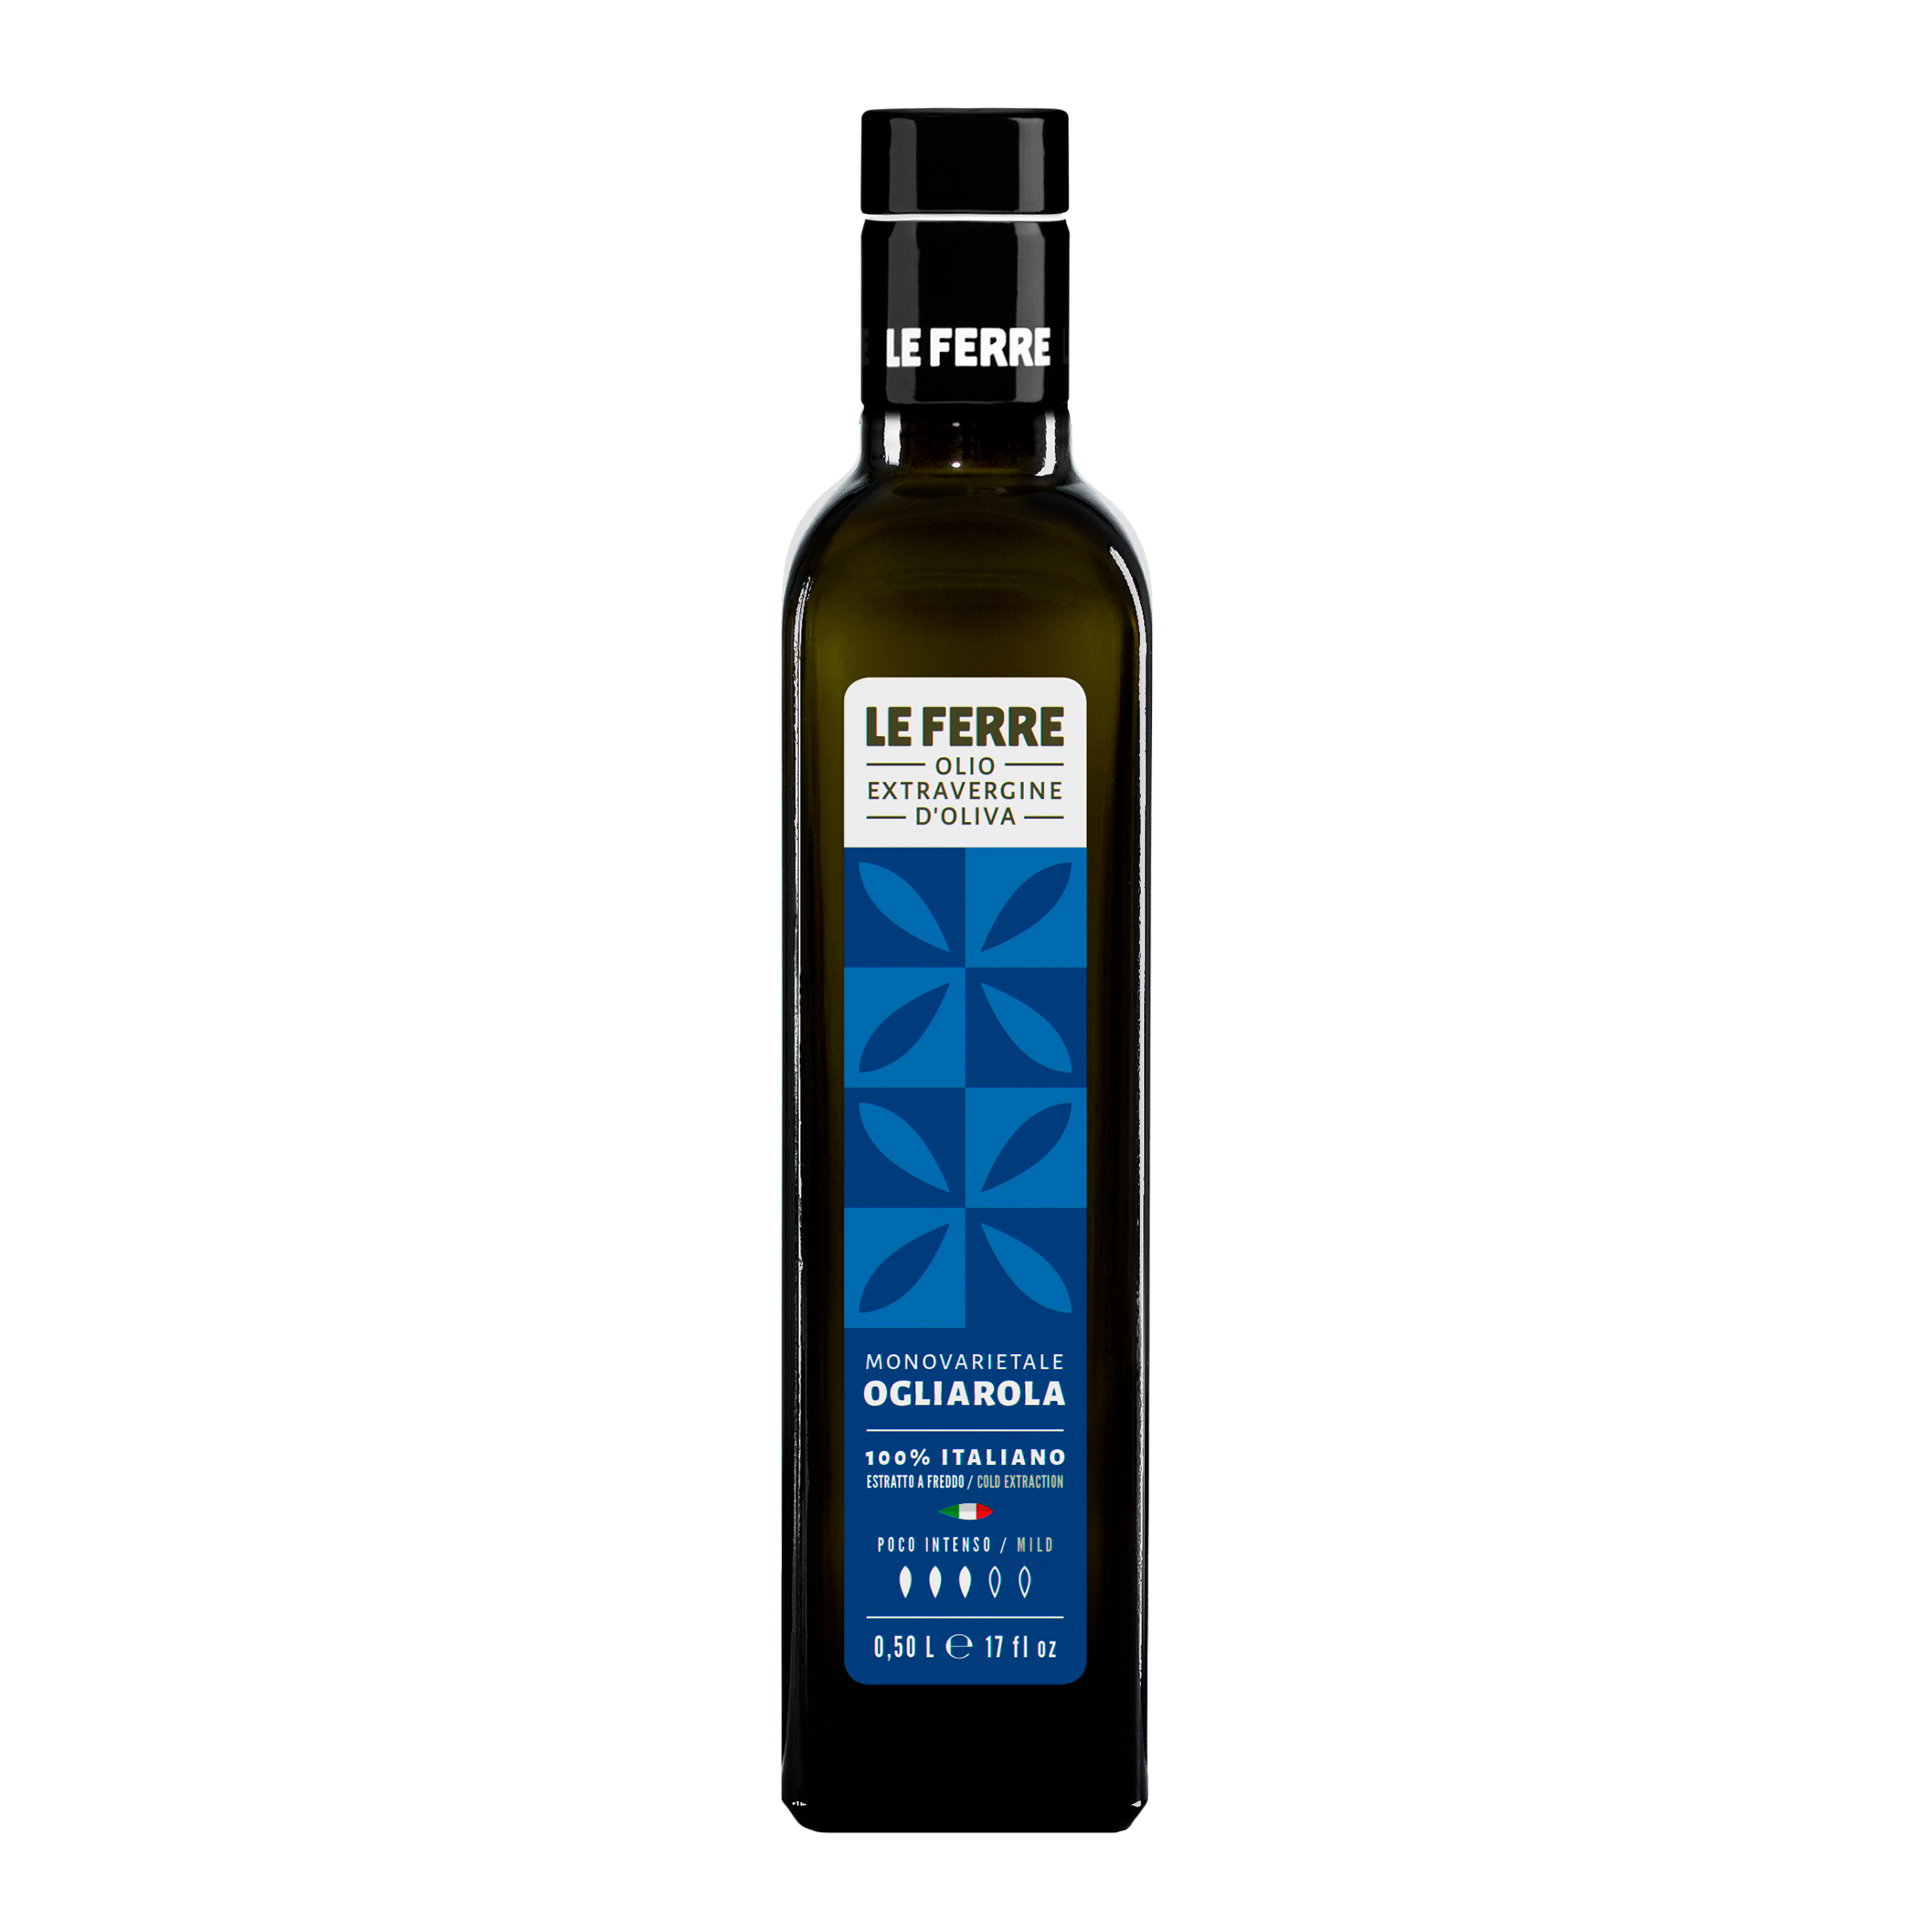 Le Ferre Ogliarola Cold Extracted Italian Extra Virgin Olive Oil 500ml